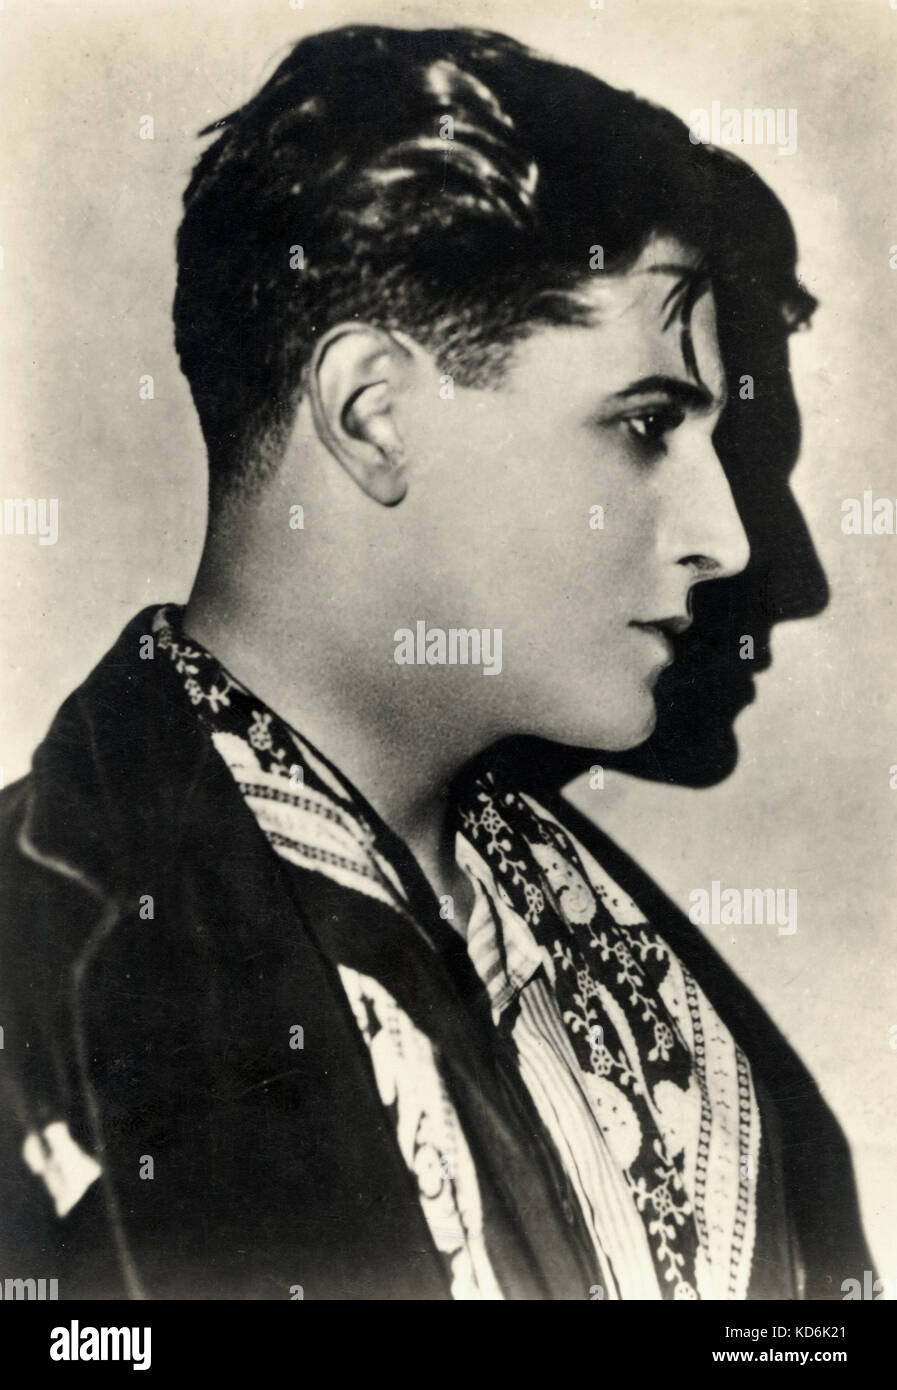 Ivor Novello, profile portrait.  British composer, author and actor, 1893-1951. W. & F. Film Service. Stock Photo